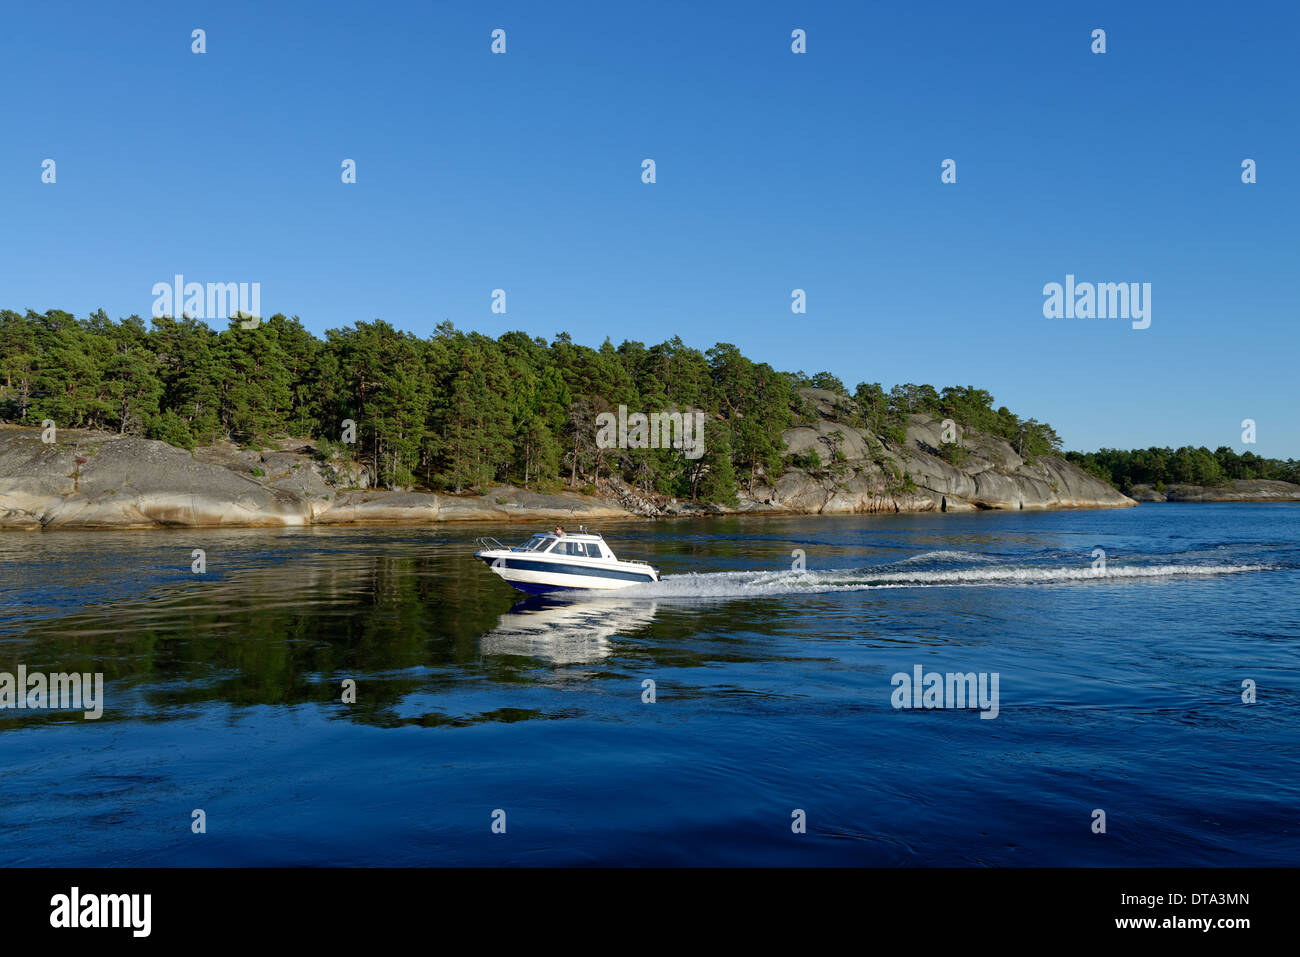 Motorboat off the island of Soder Langjolm, viewed from Finnhamn Island, Stockholm Middle Archipelago, Stockholm, Sweden Stock Photo